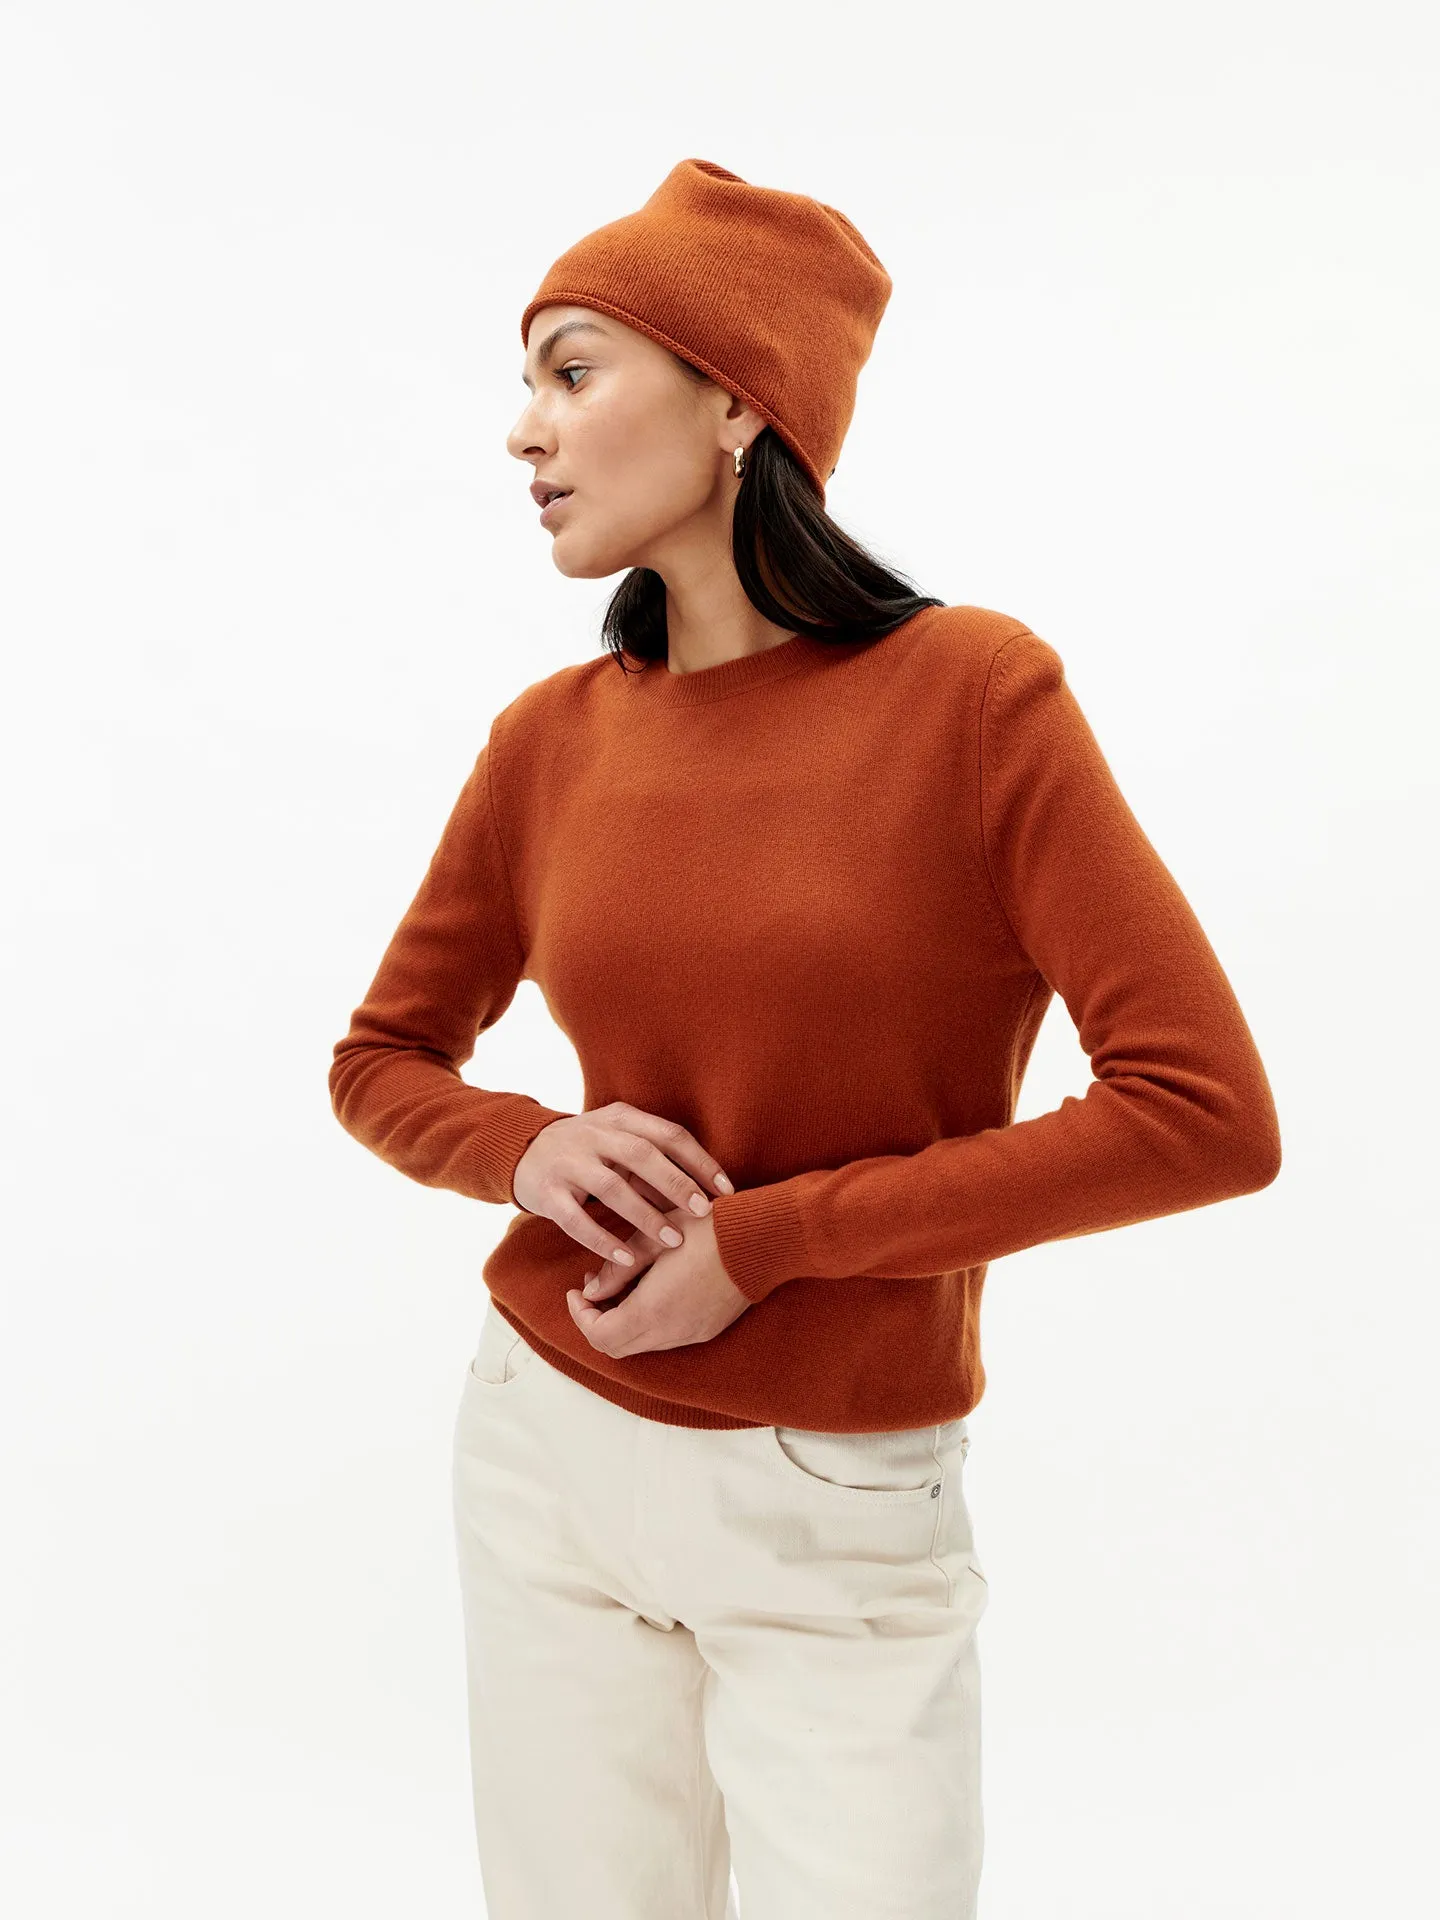 Women's Cashmere €99 Hat & Sweater Set Sugar Almond - Gobi Cashmere